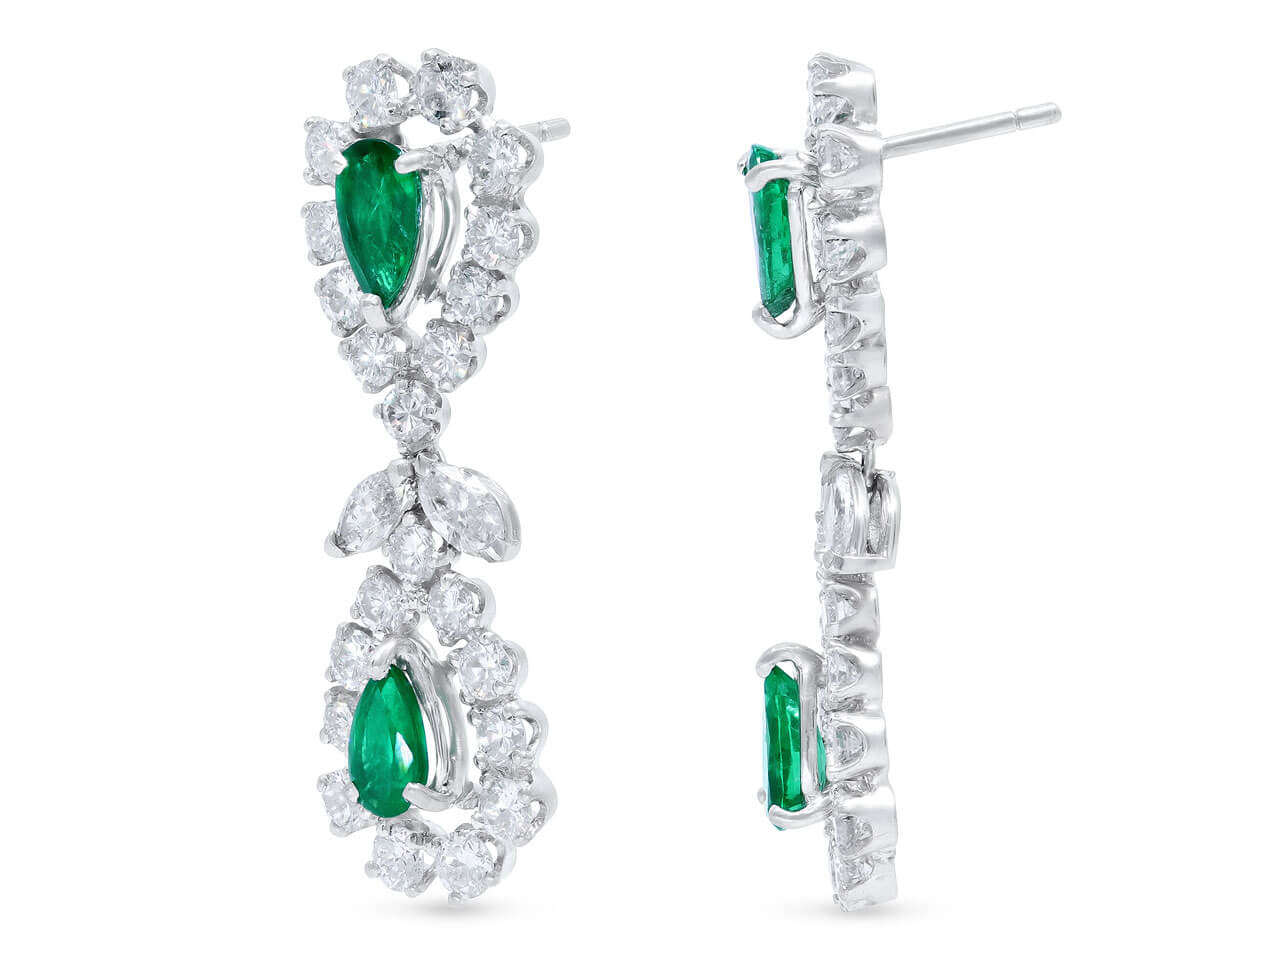 Beladora 'Bespoke' Emerald and Diamond Drop Earrings in Platinum